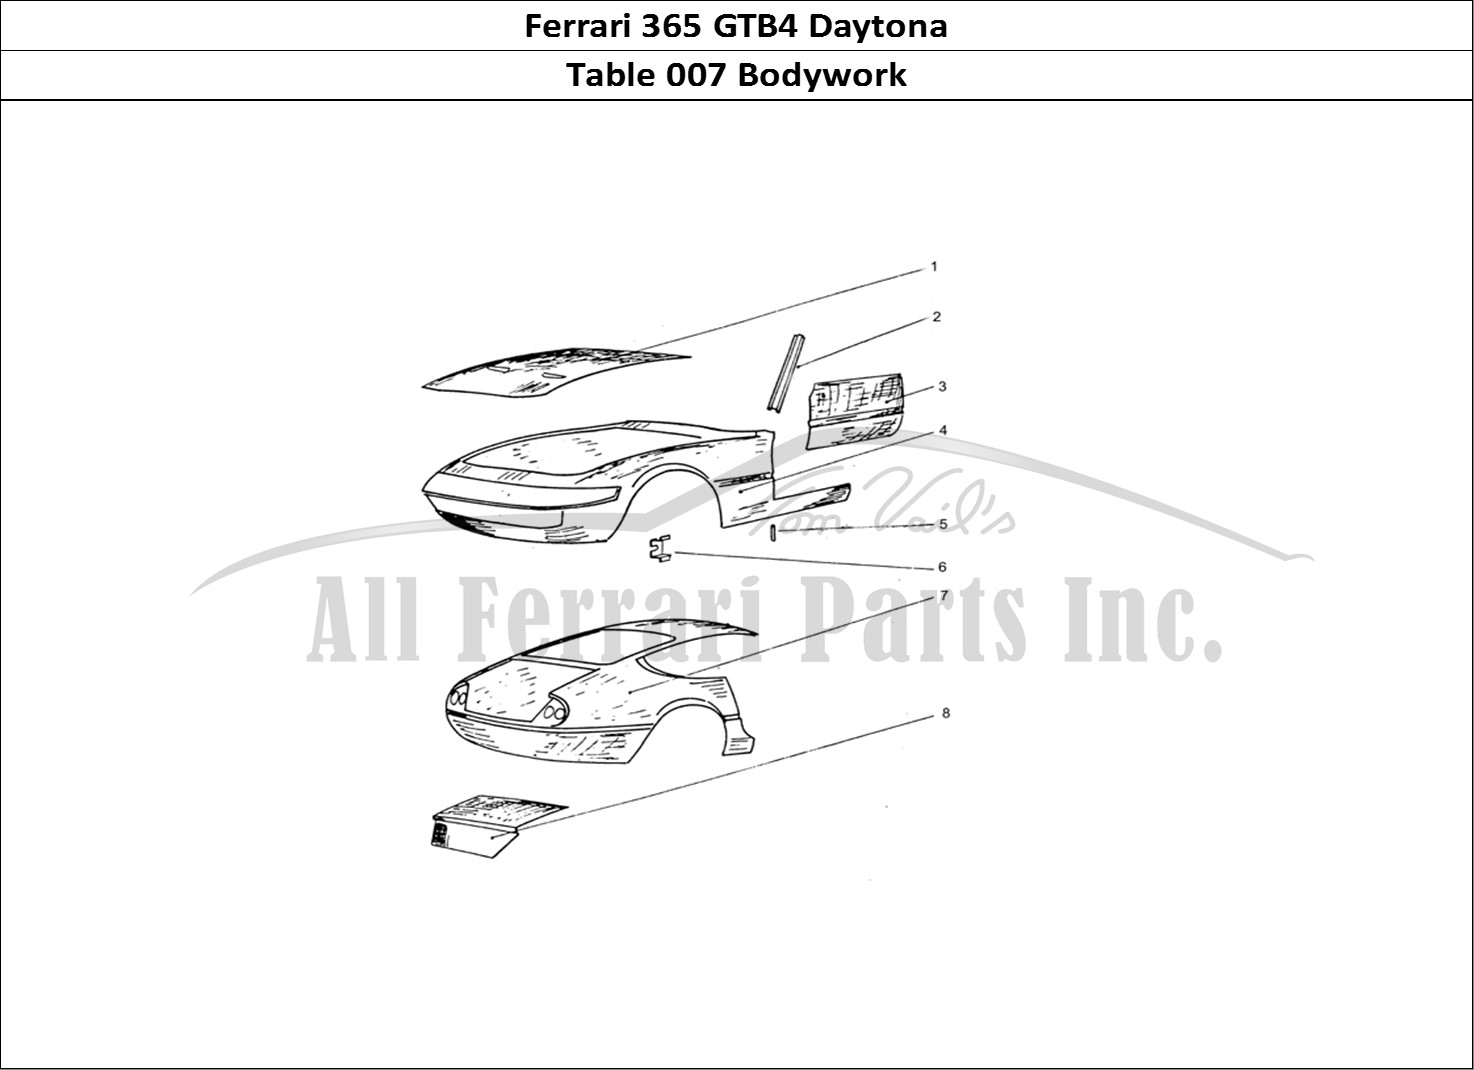 Ferrari Parts Ferrari 365 GTB4 Daytona (Coachwork) Page 007 Front & Rear outer body p